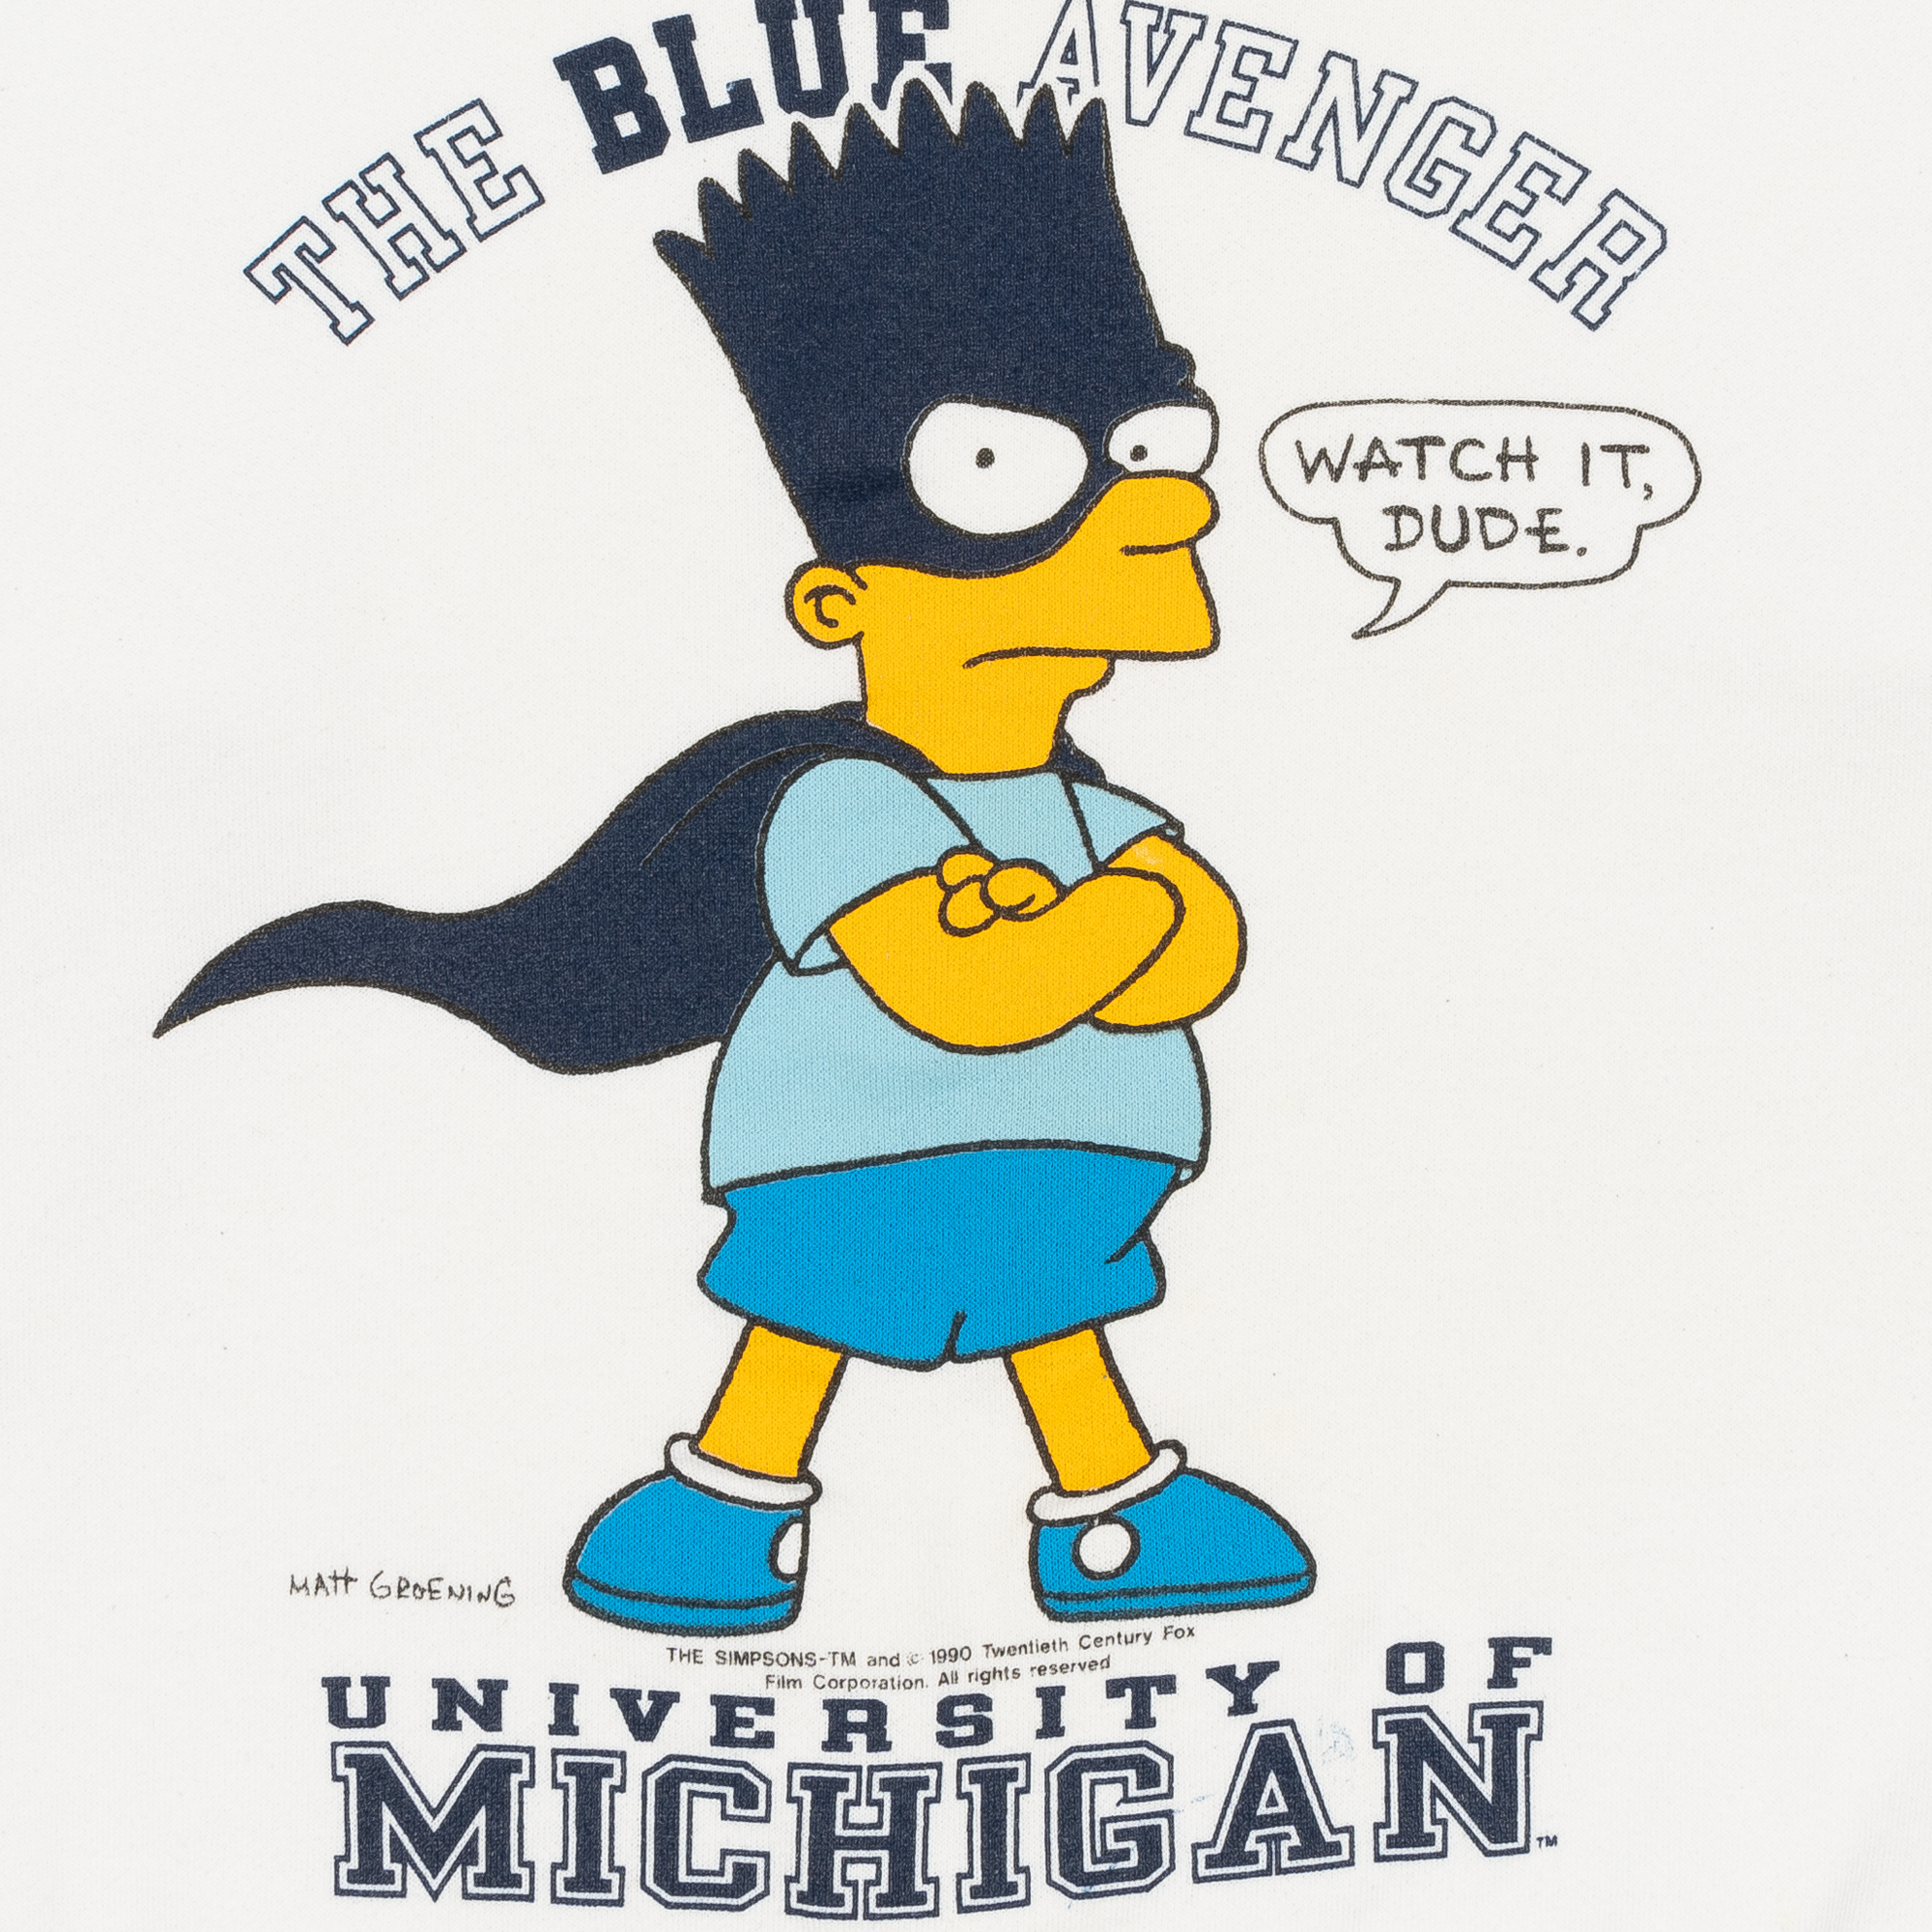 Bart "The Blue Avenger" University of Michigan 1990 Crewneck White-PLUS